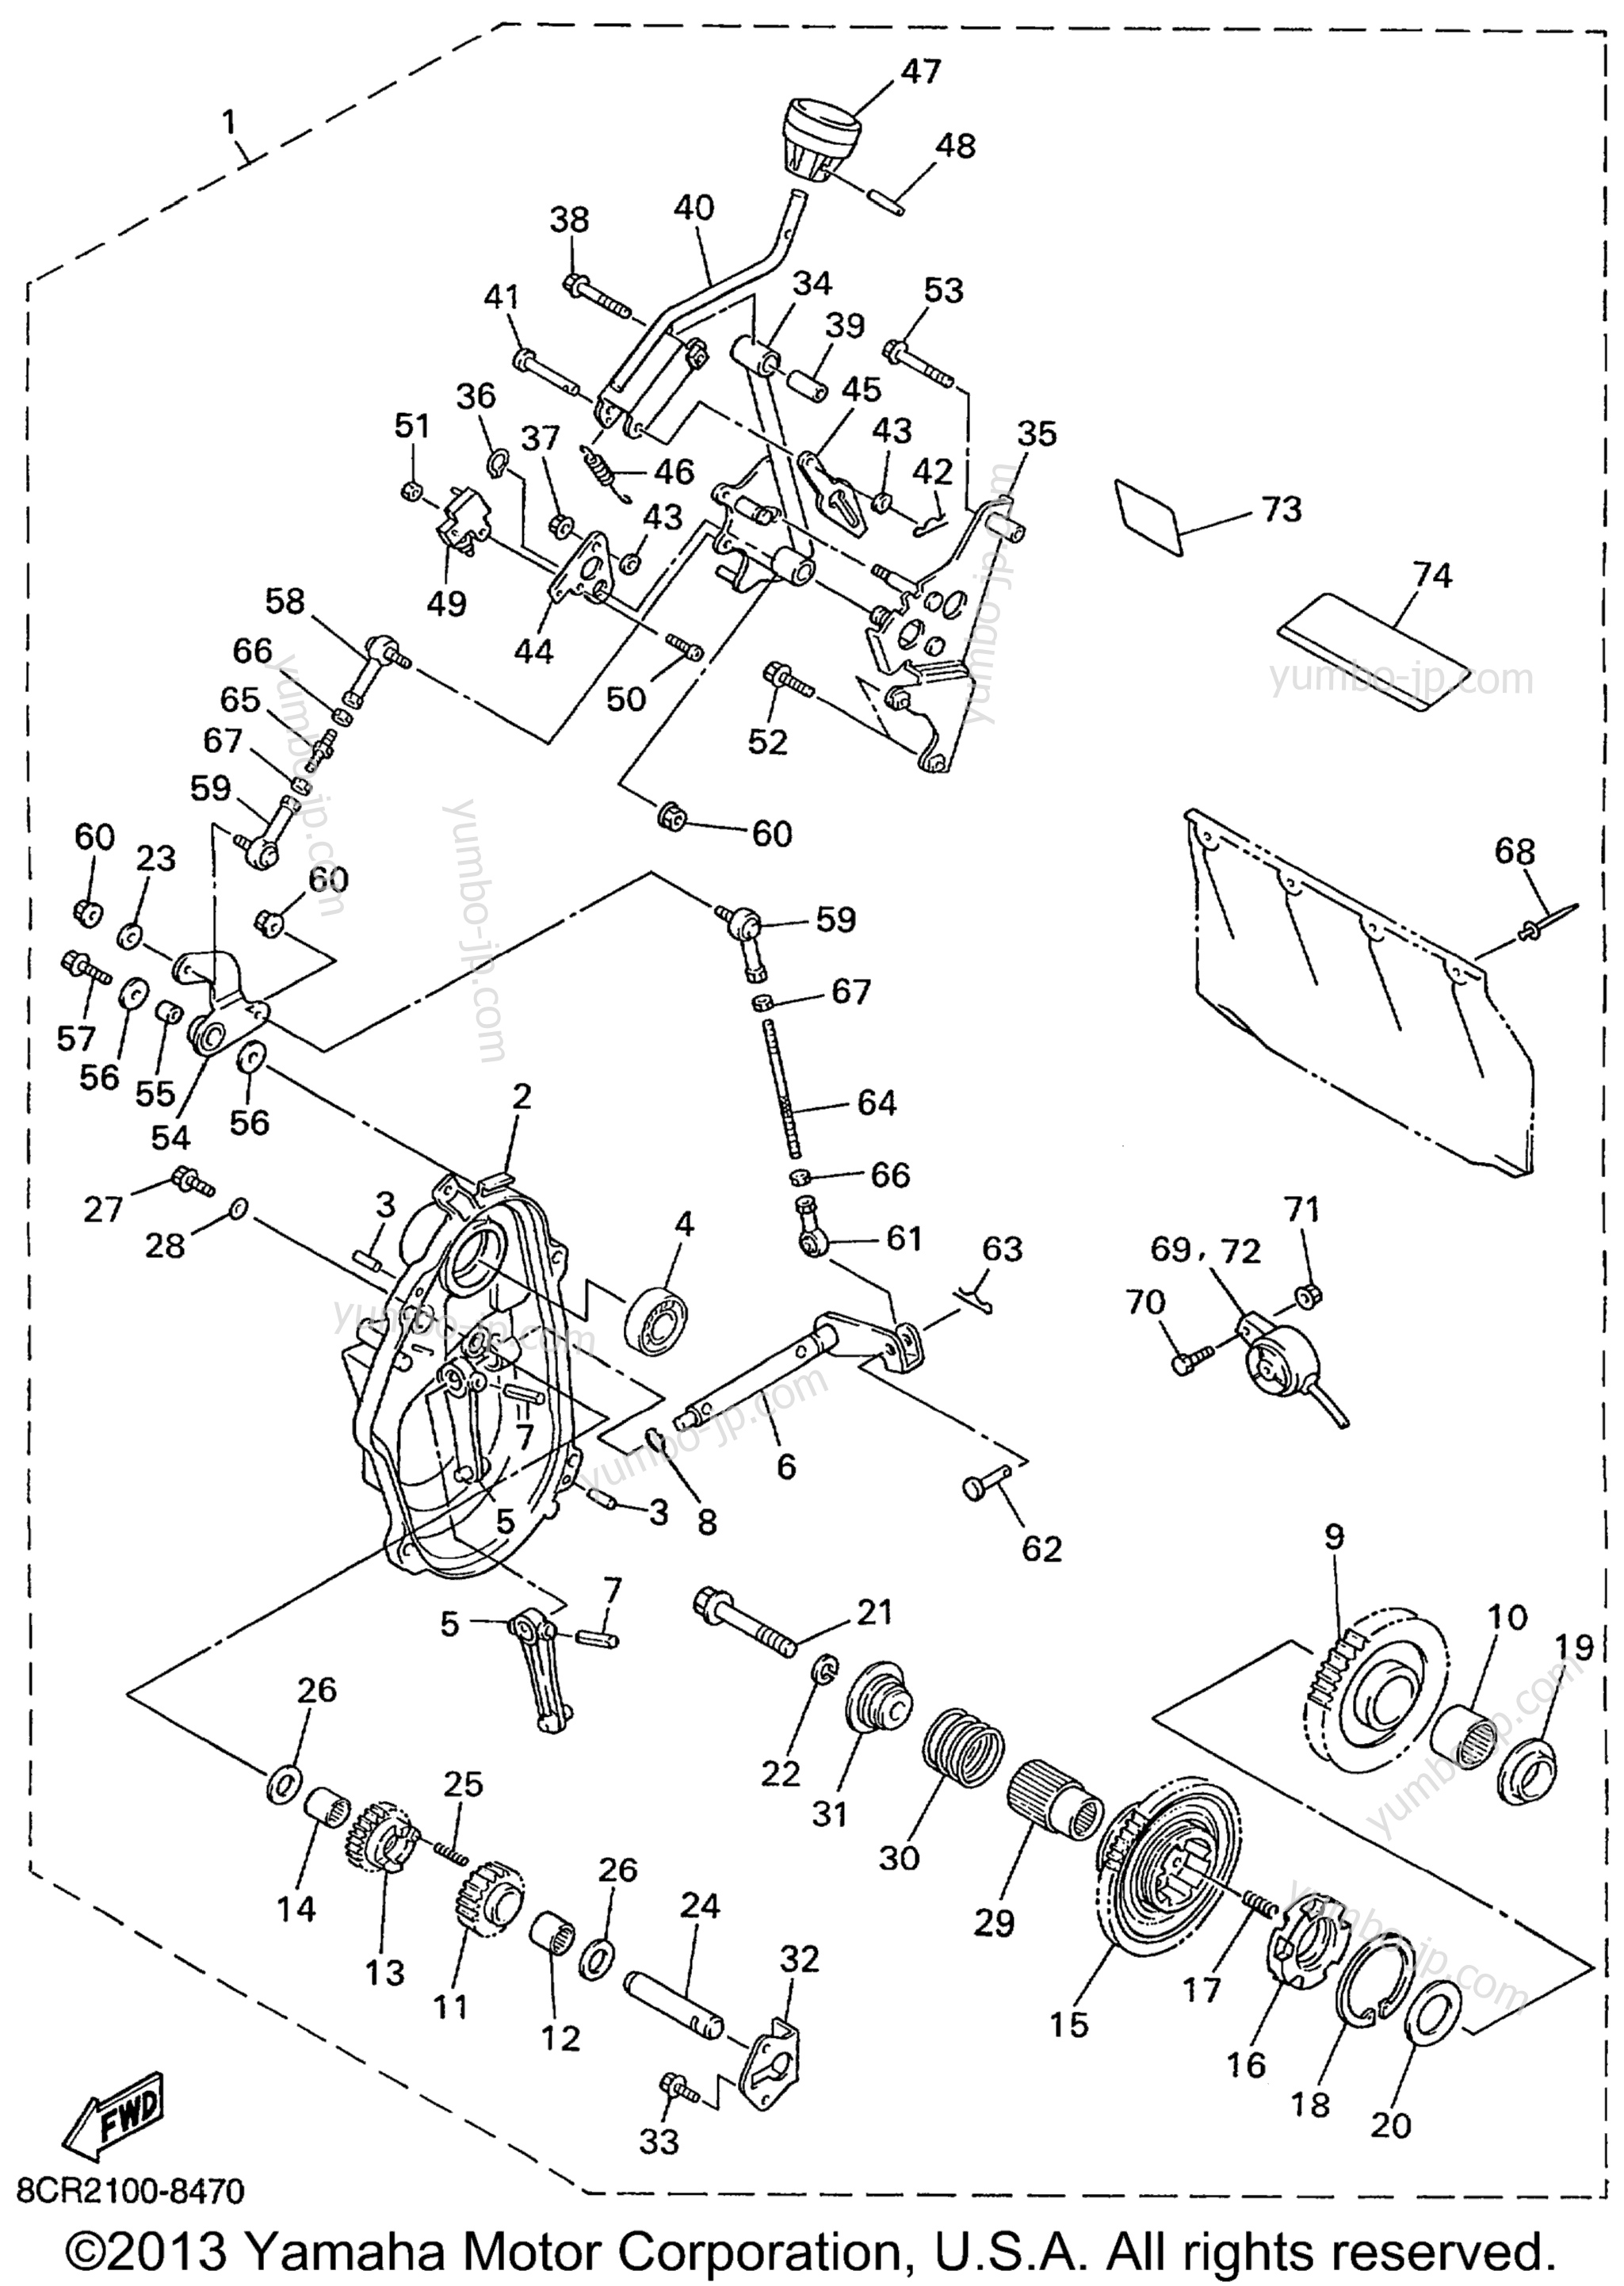 Alternate Reverse Gear Kit for snowmobiles YAMAHA VMAX 600 SX (VX600SXBC) 1999 year